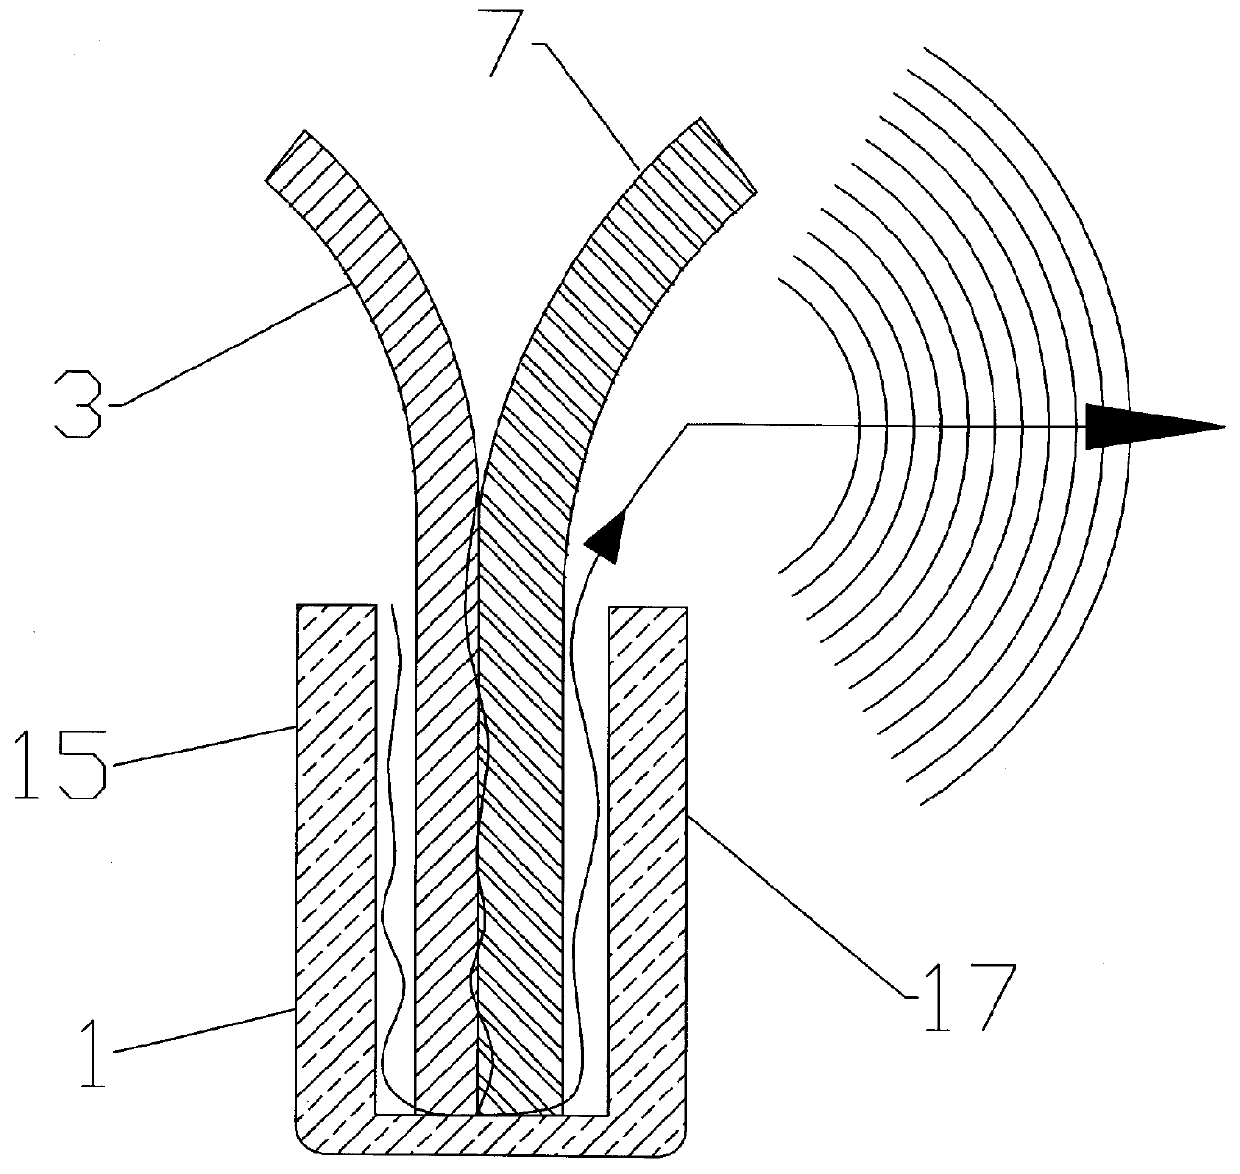 Reflector antenna radome attachment band clamp